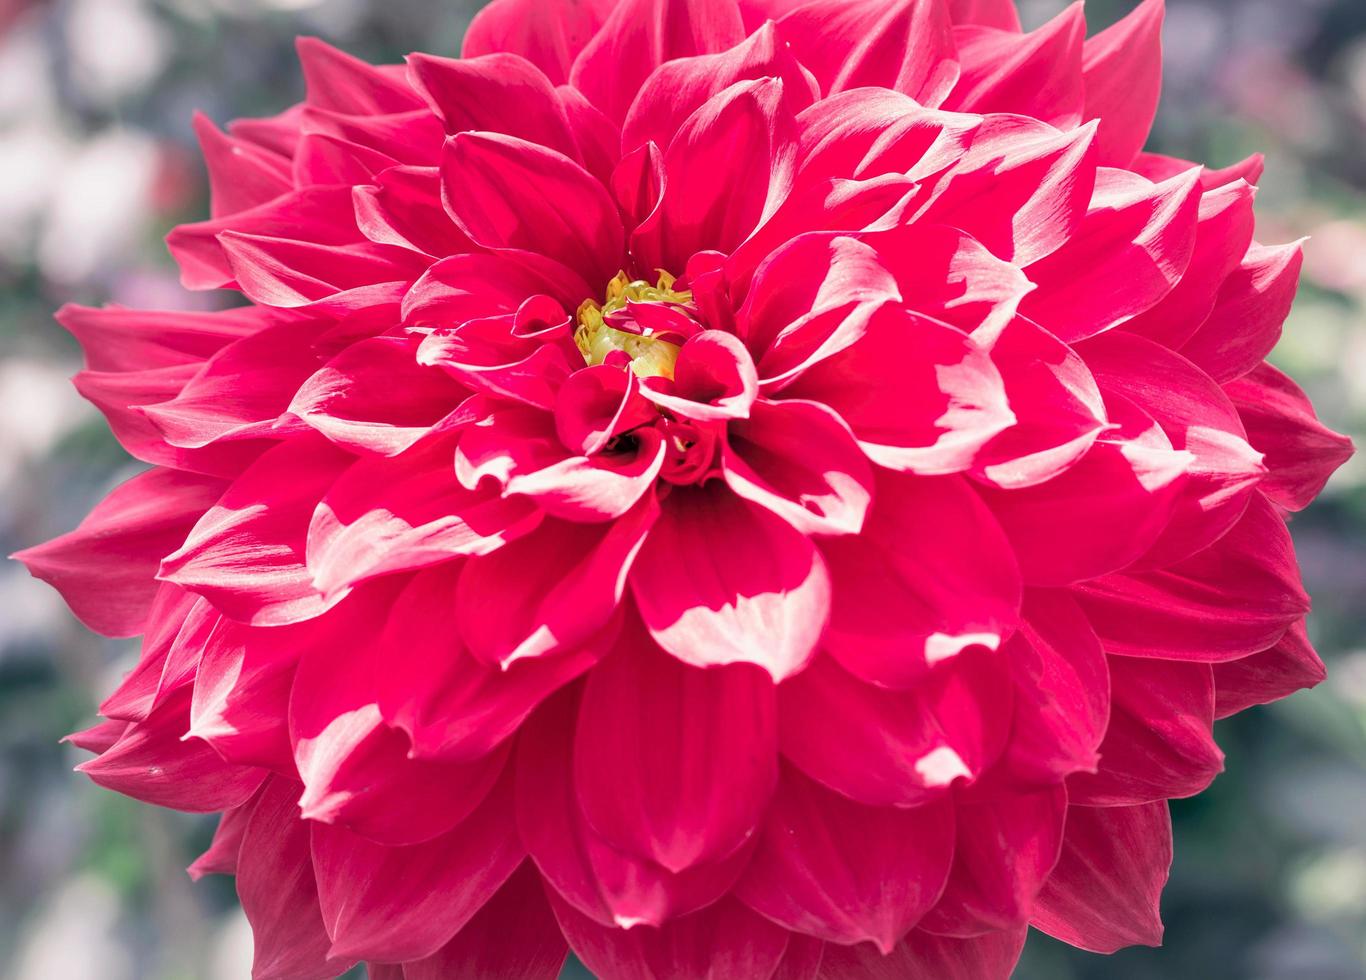 Closeup of red dahlia flower with retro filter effect photo